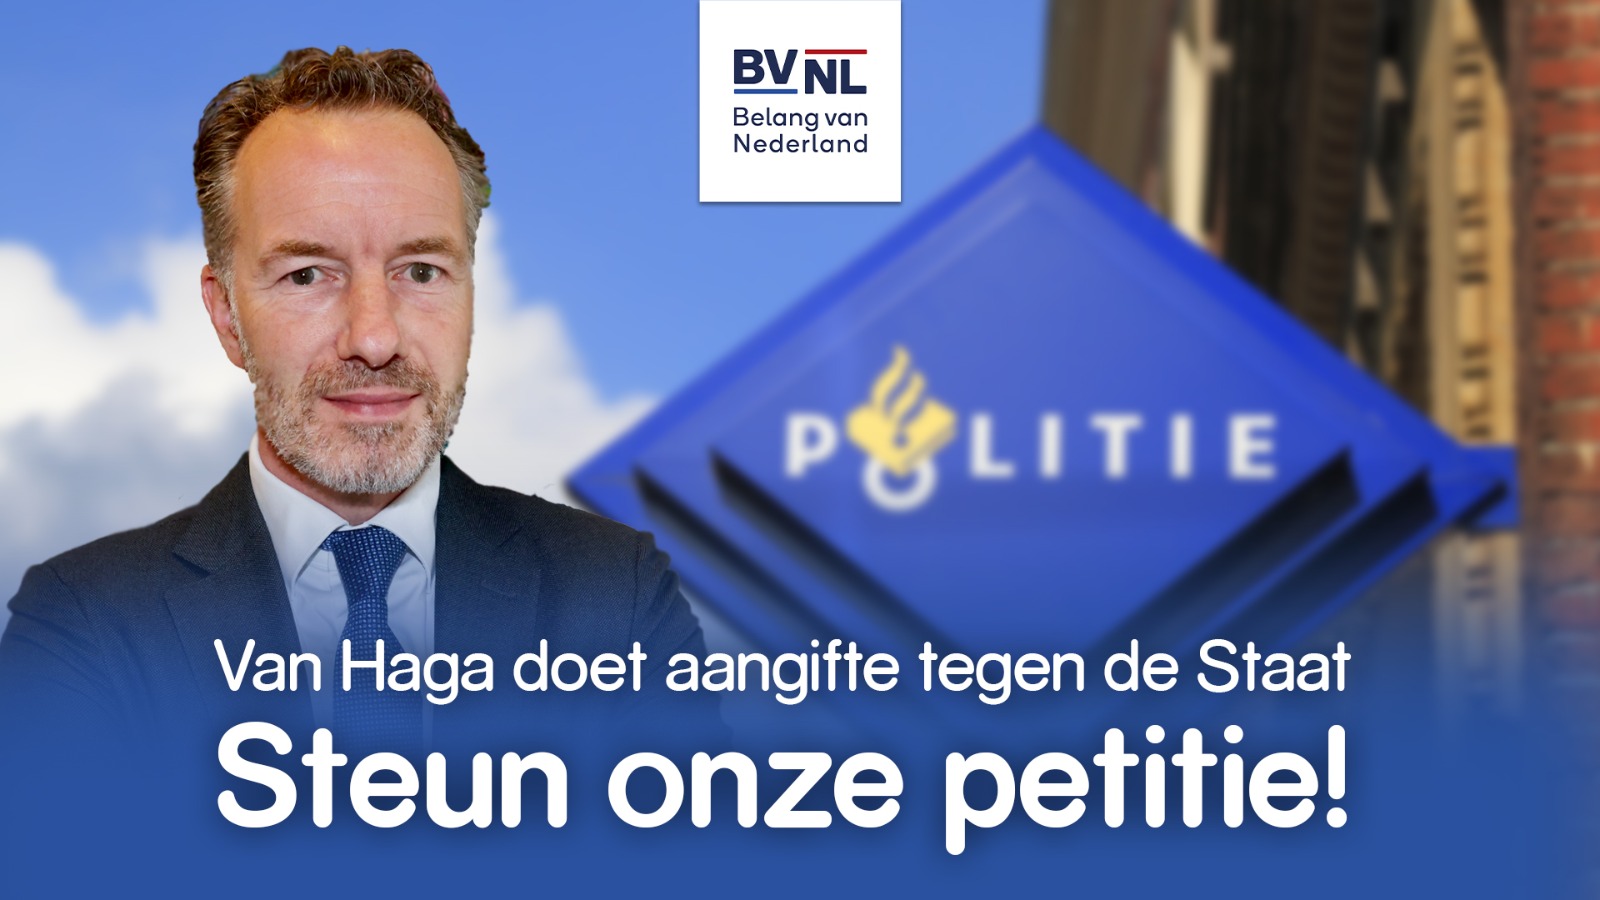 bvnl.nl